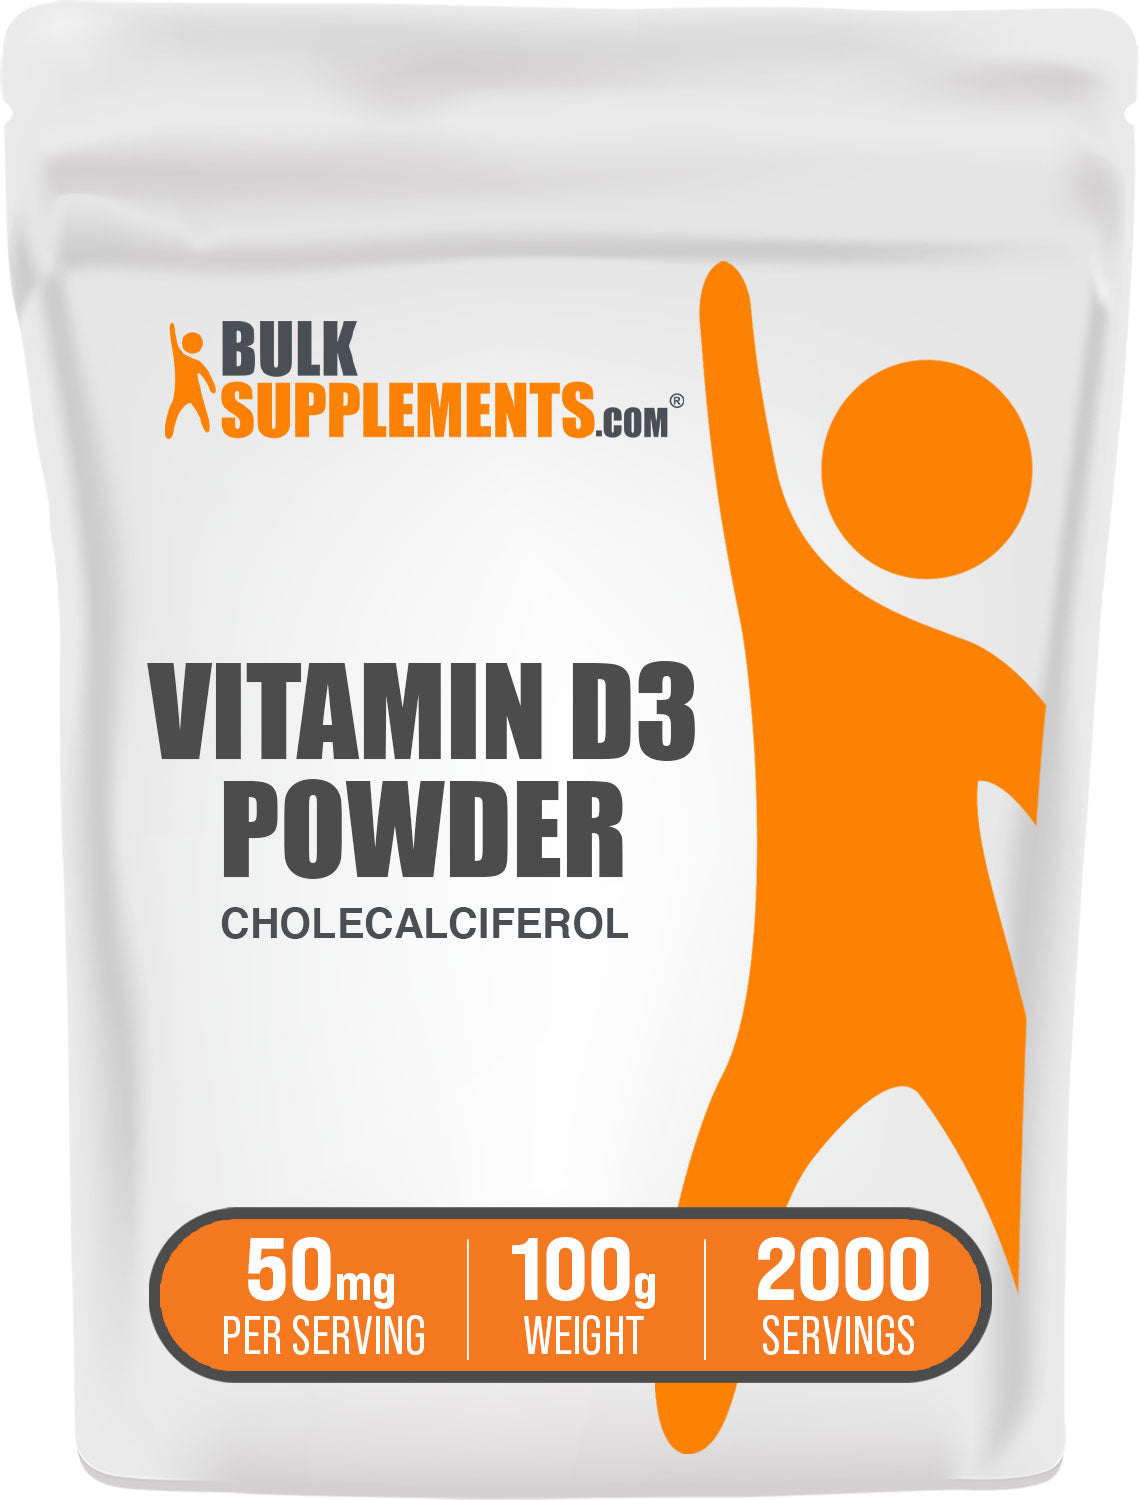 BulkSupplements Vitamin D3 Powder Cholecalciferol 100g bag